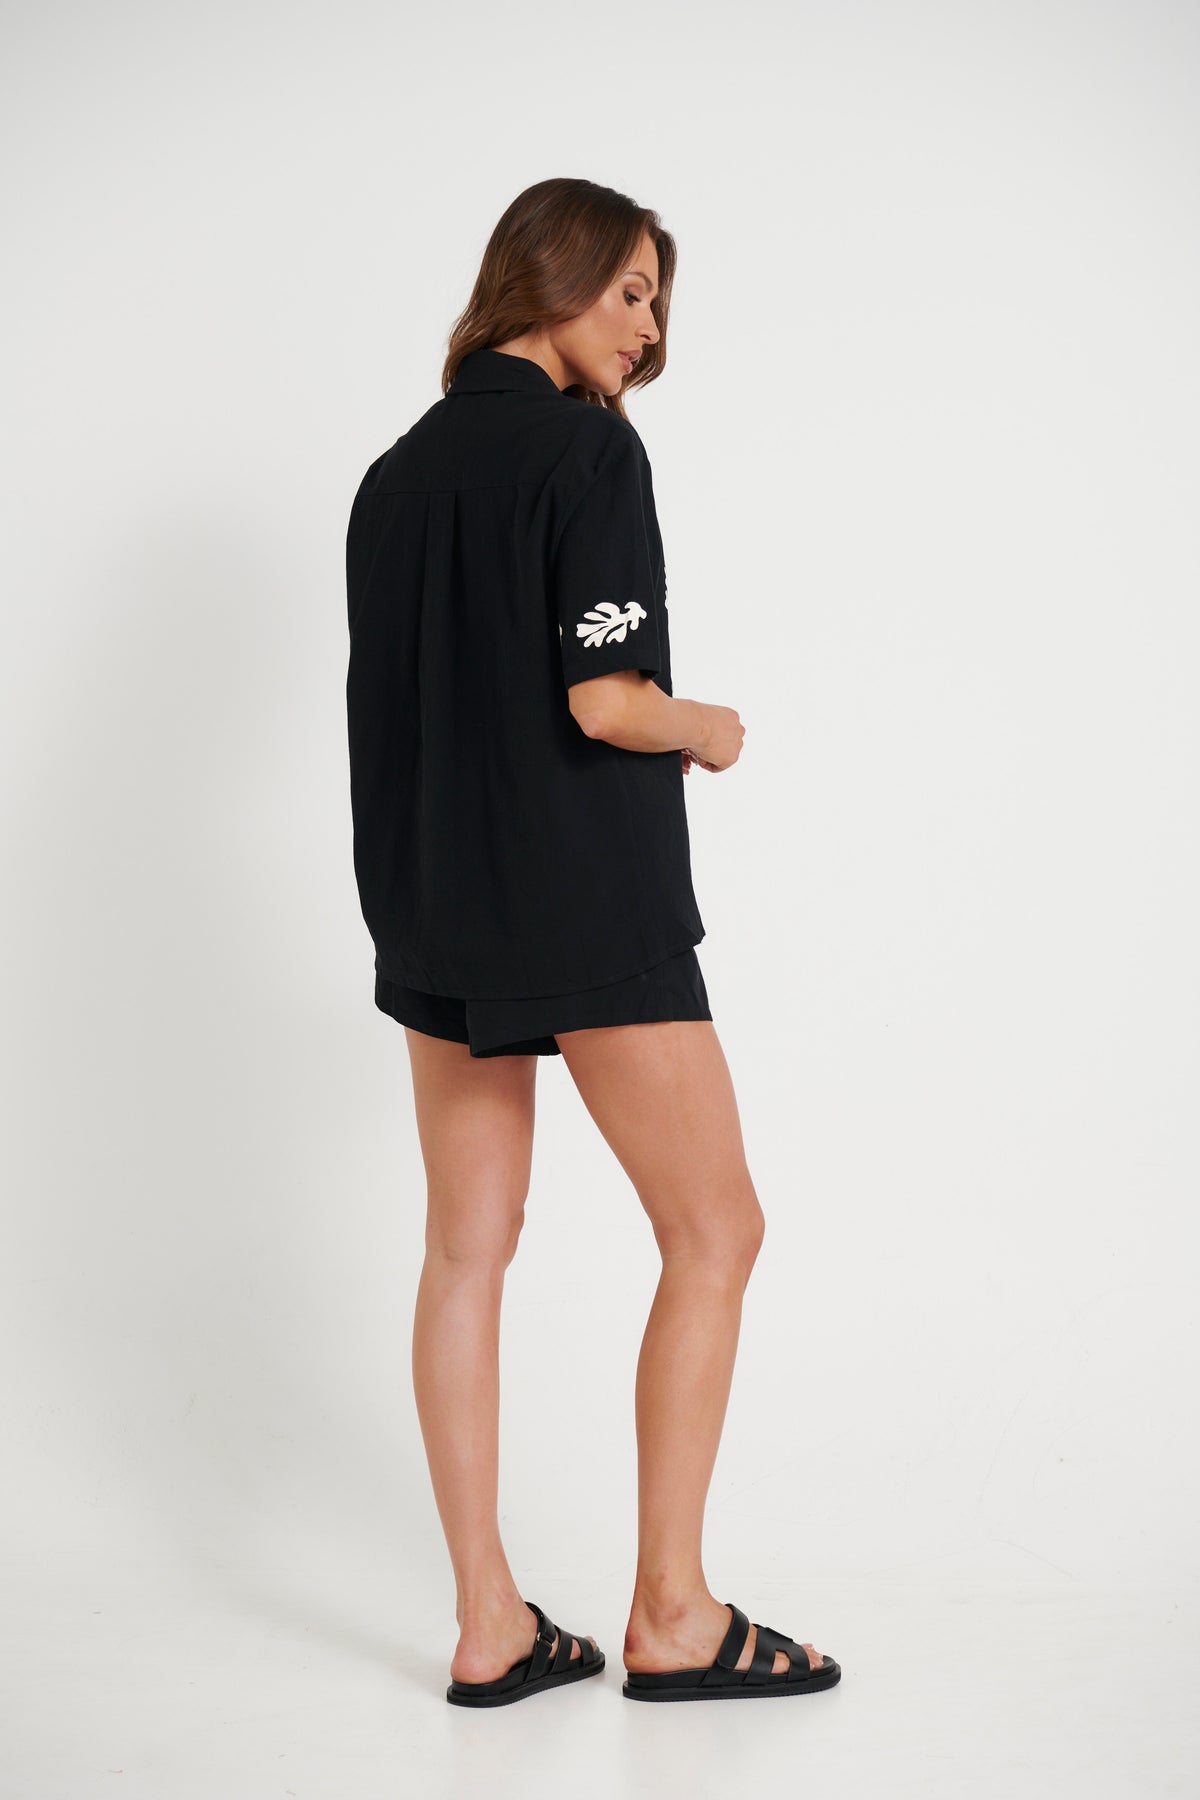 Amalia Shirt Black/Sand - FINAL SALE